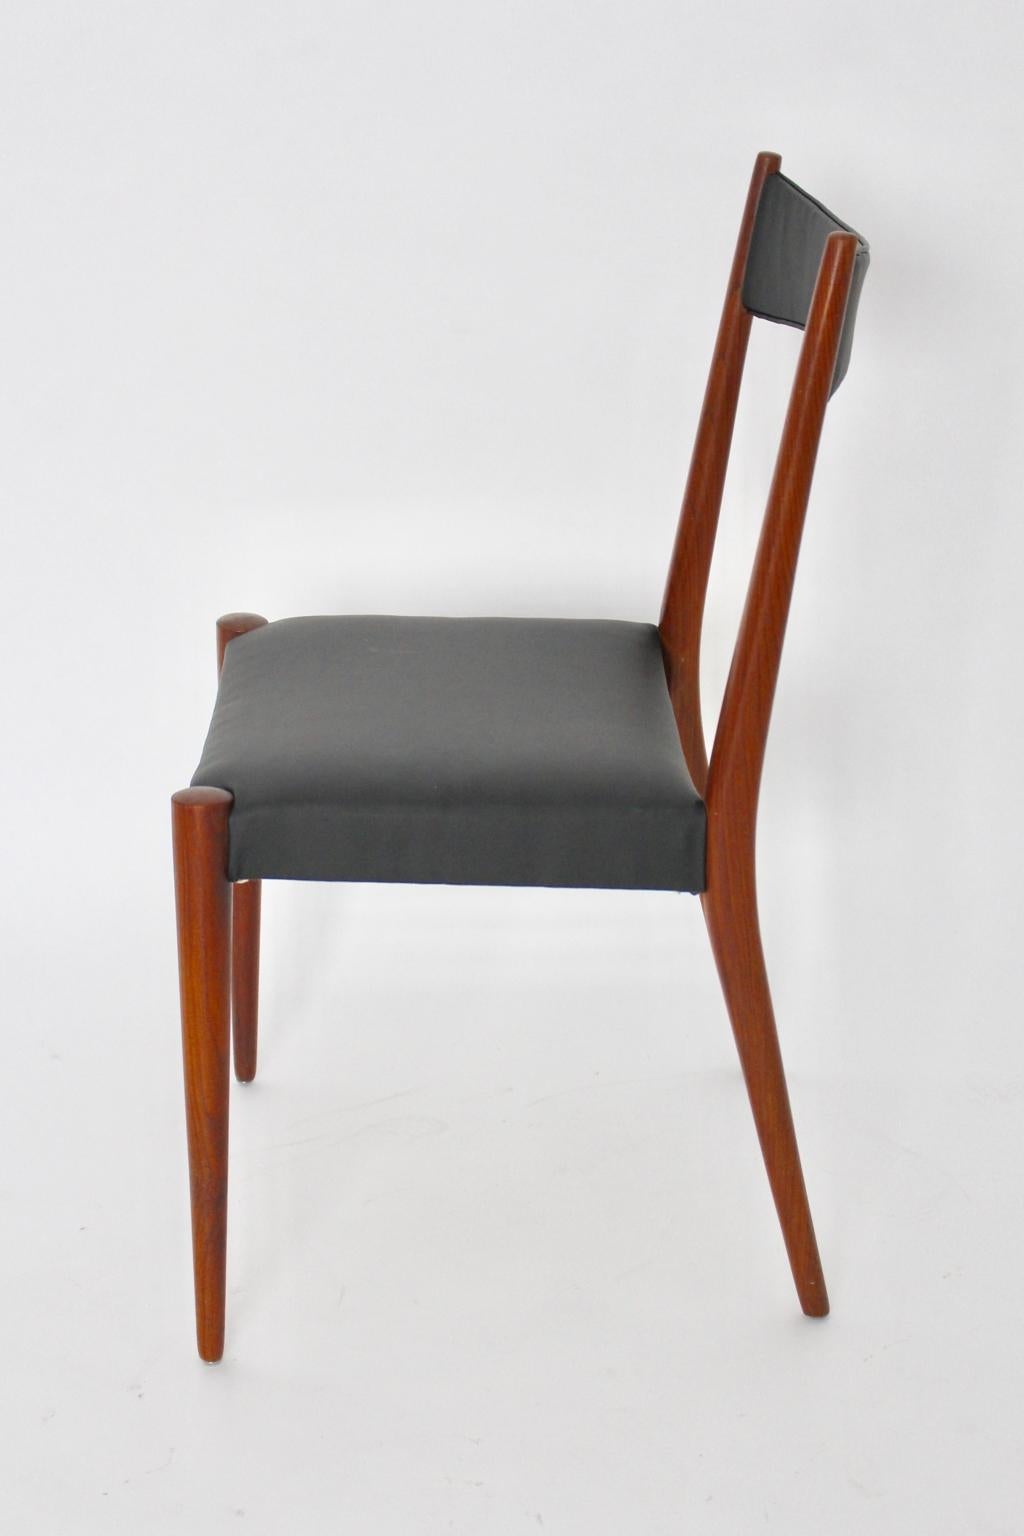 Austrian Mid-Century Modern Vintage Beech Chair by Anna-Lülja Praun 1953 Austria For Sale